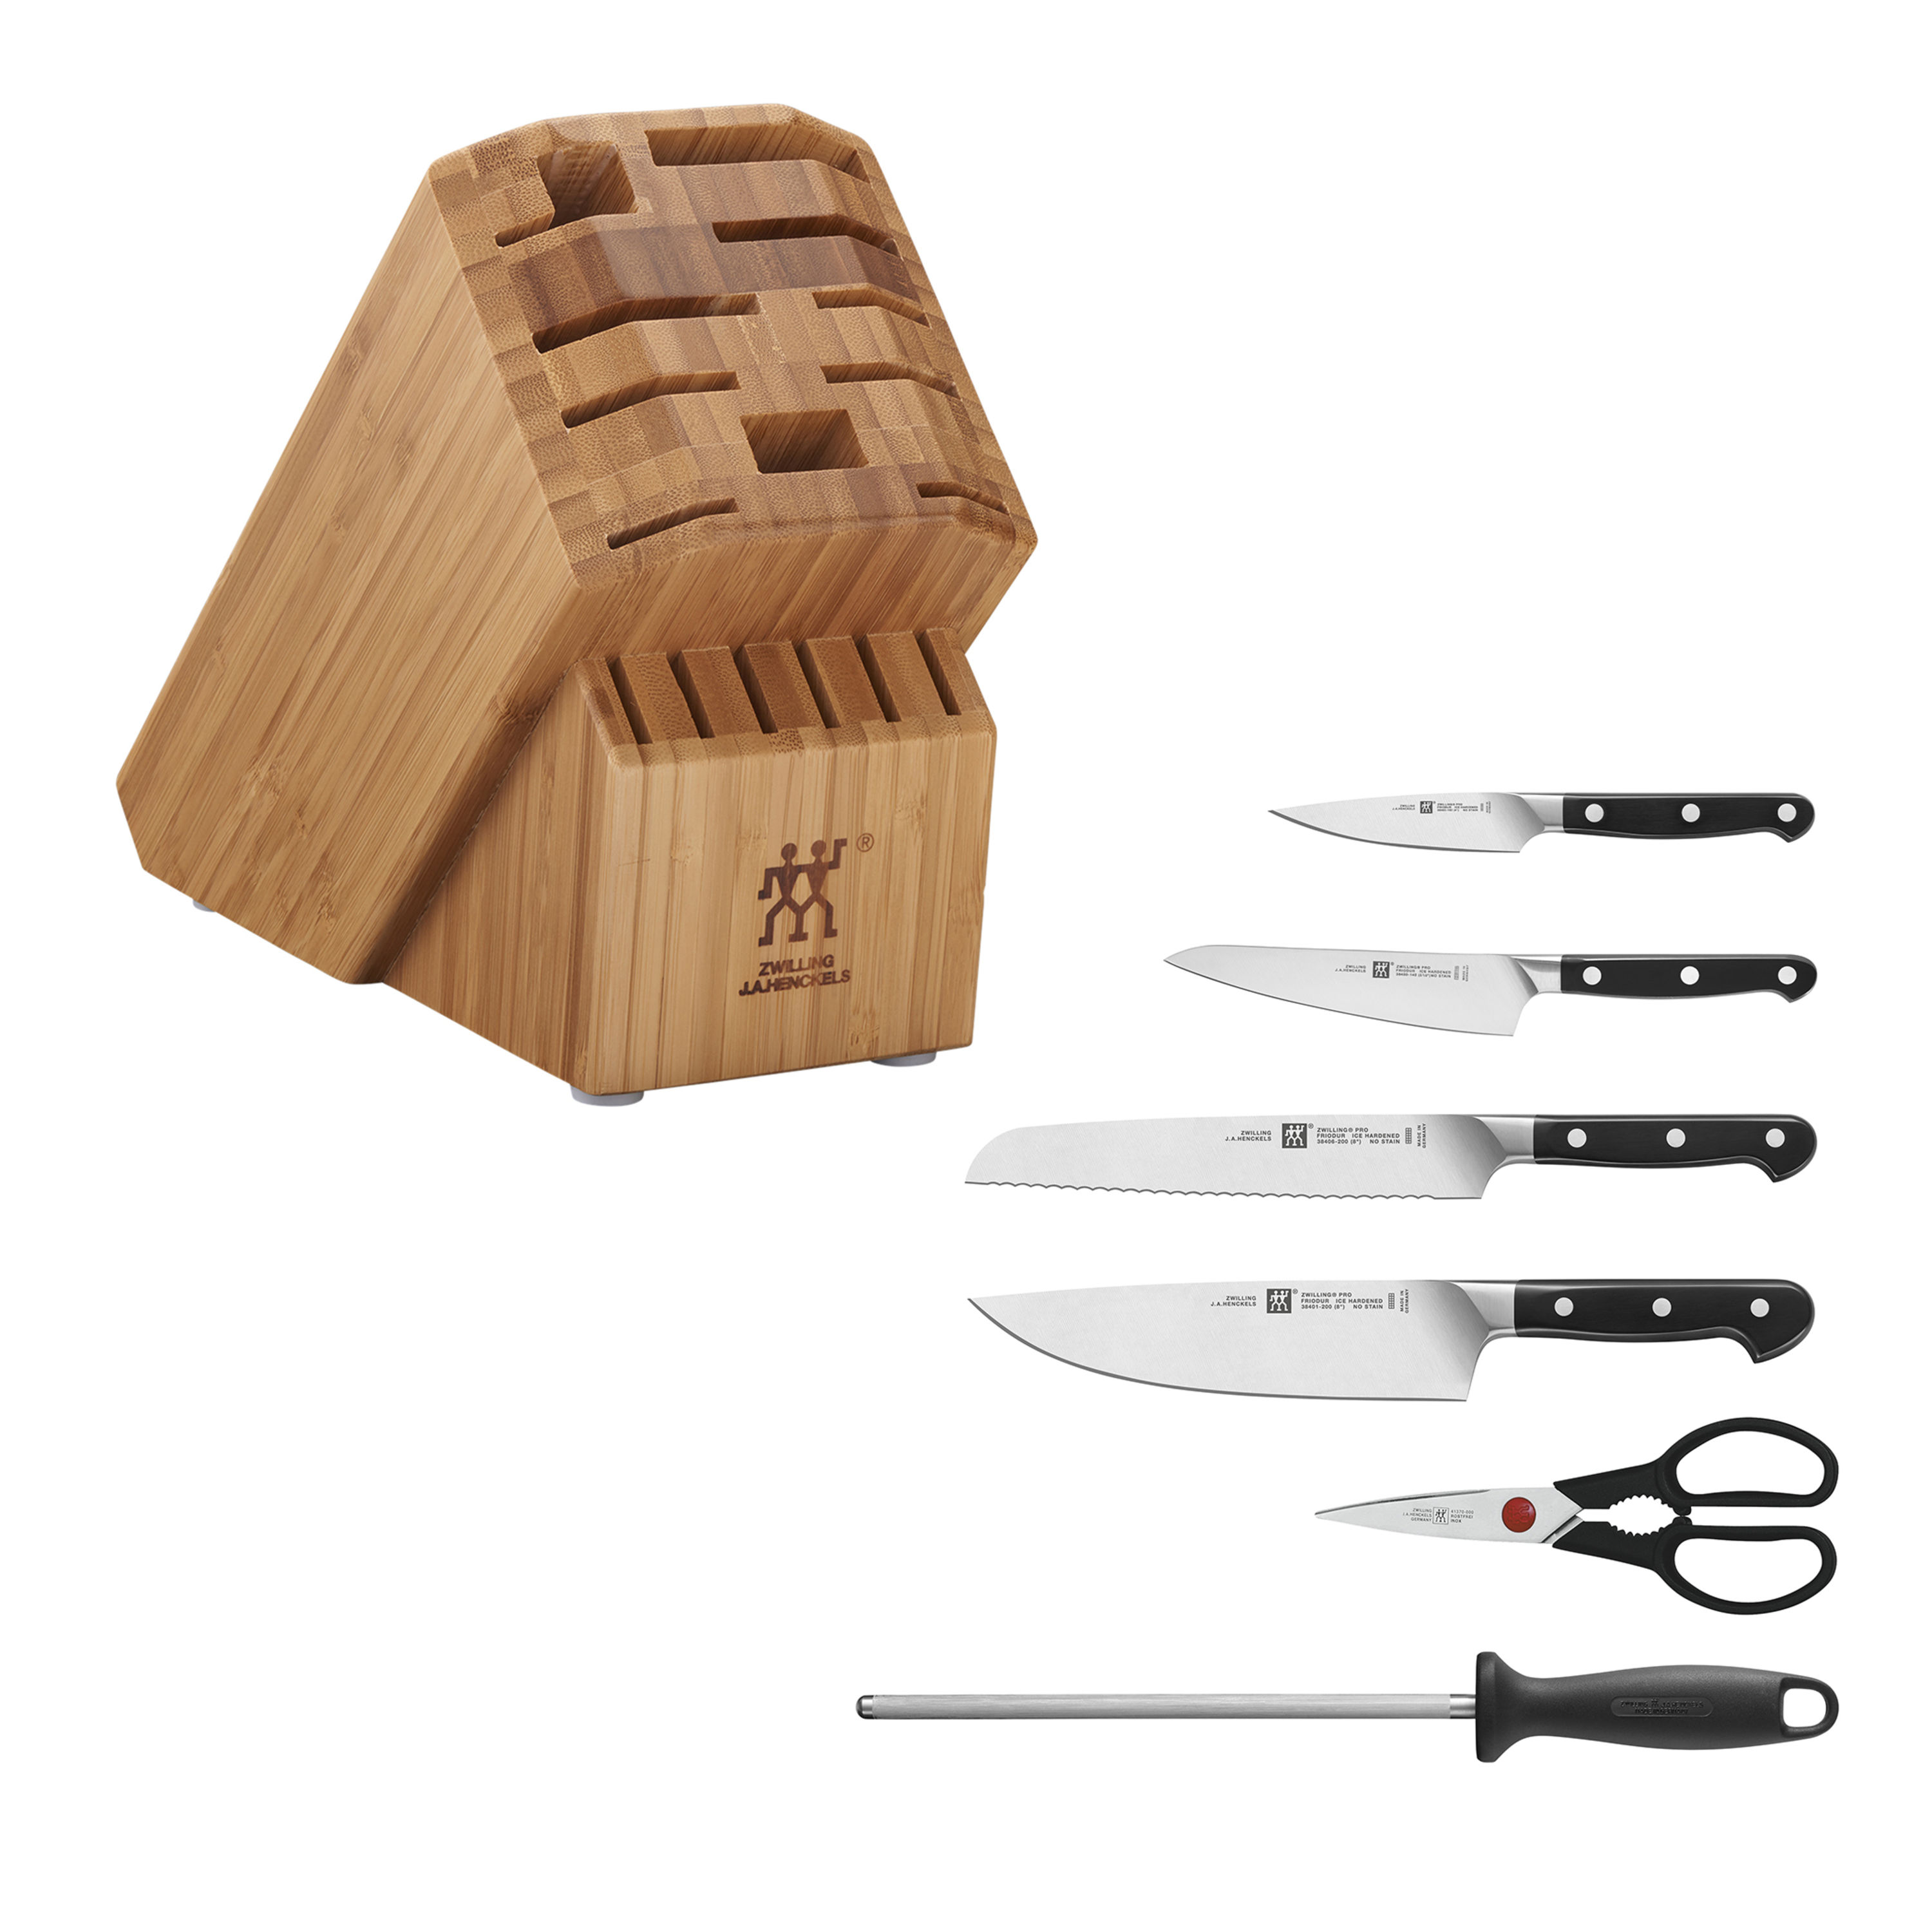 ZWILLING J.A. Henckels Pro 10-Piece Bamboo Block Knife Set + Reviews